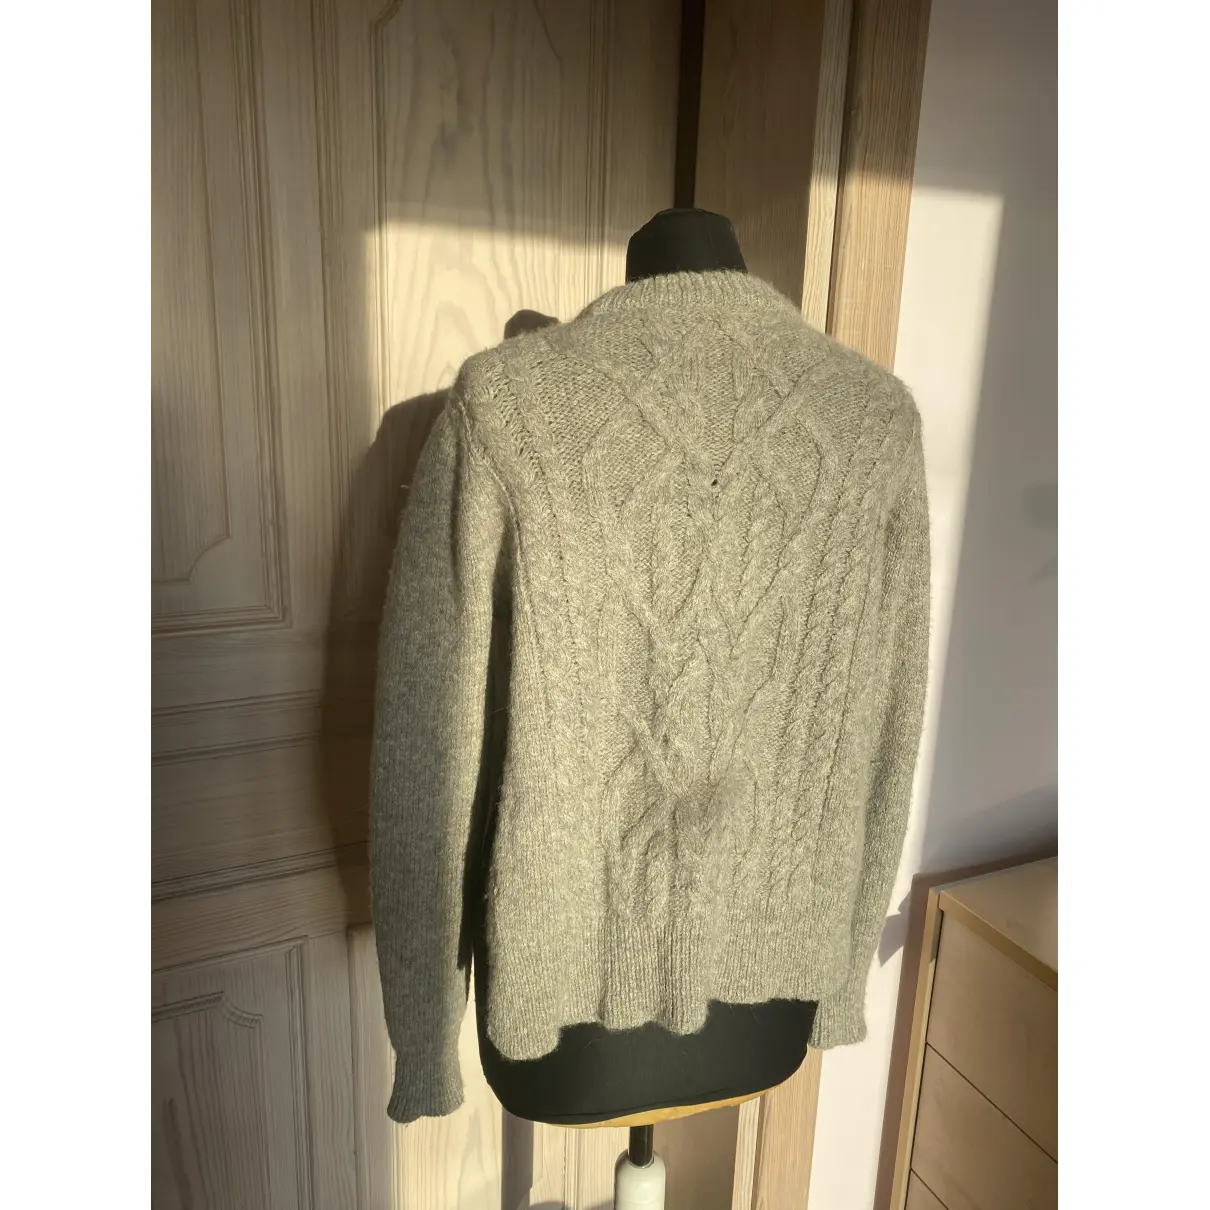 Buy Isabel Marant Wool jumper online